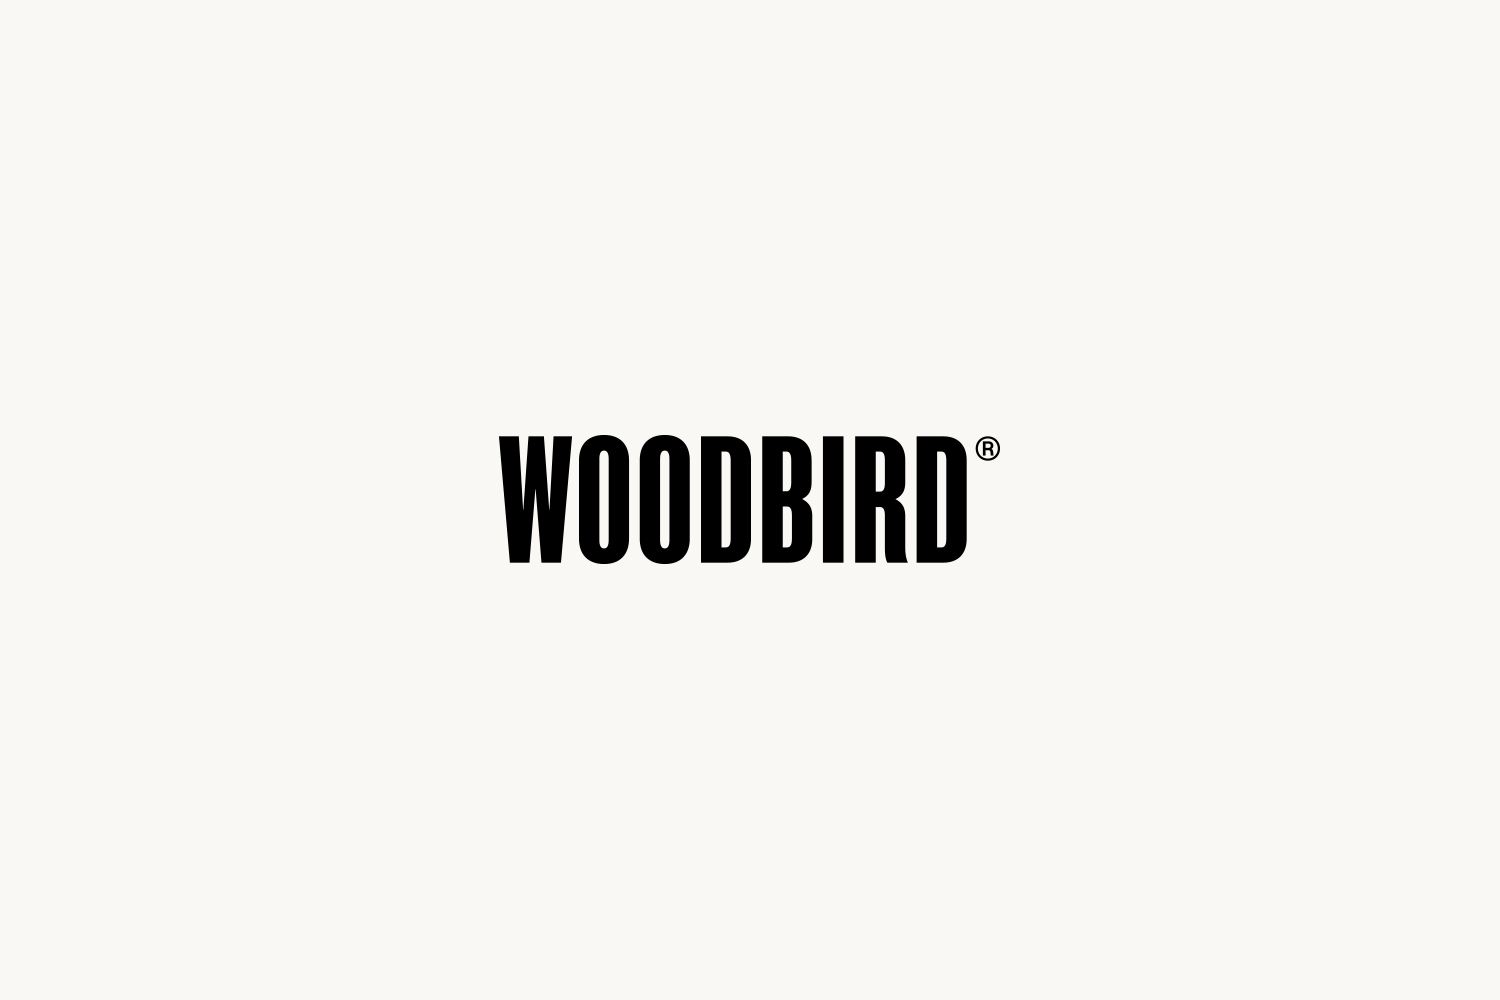 Woodbird